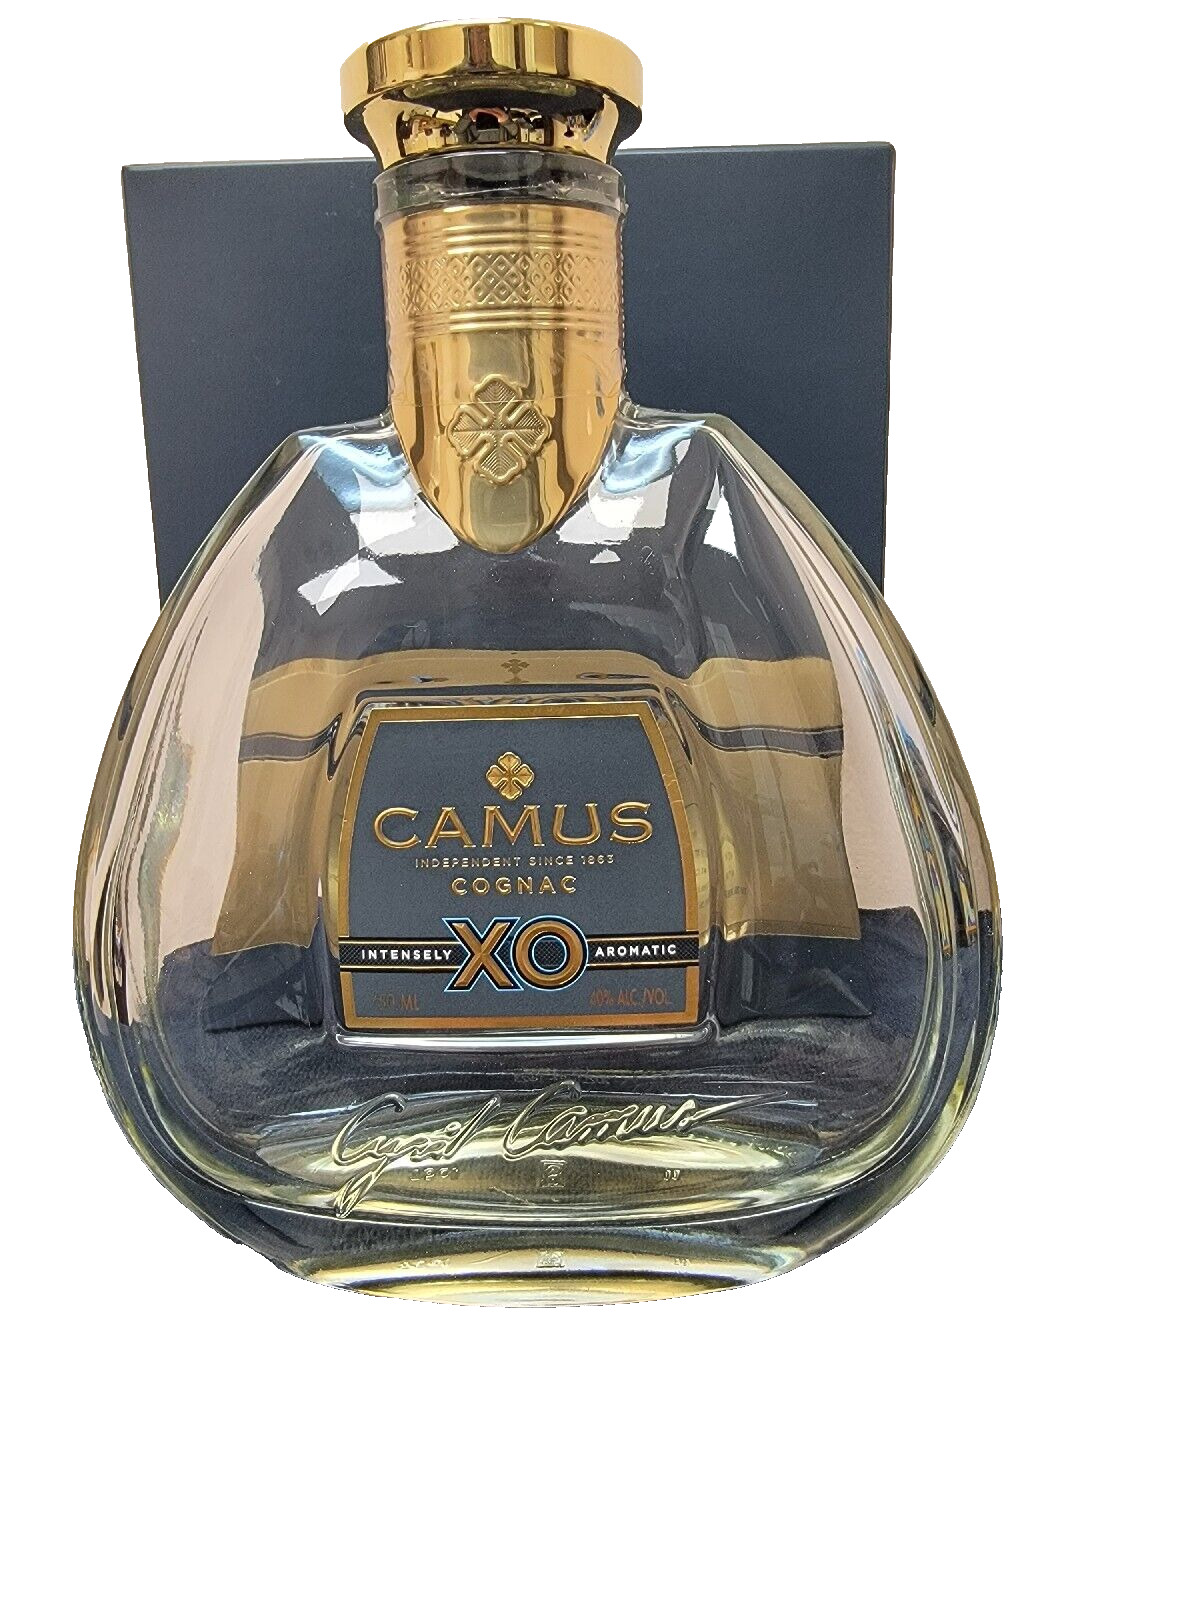 Camus  XO  Cognac EMPTY BOTTLE With Box